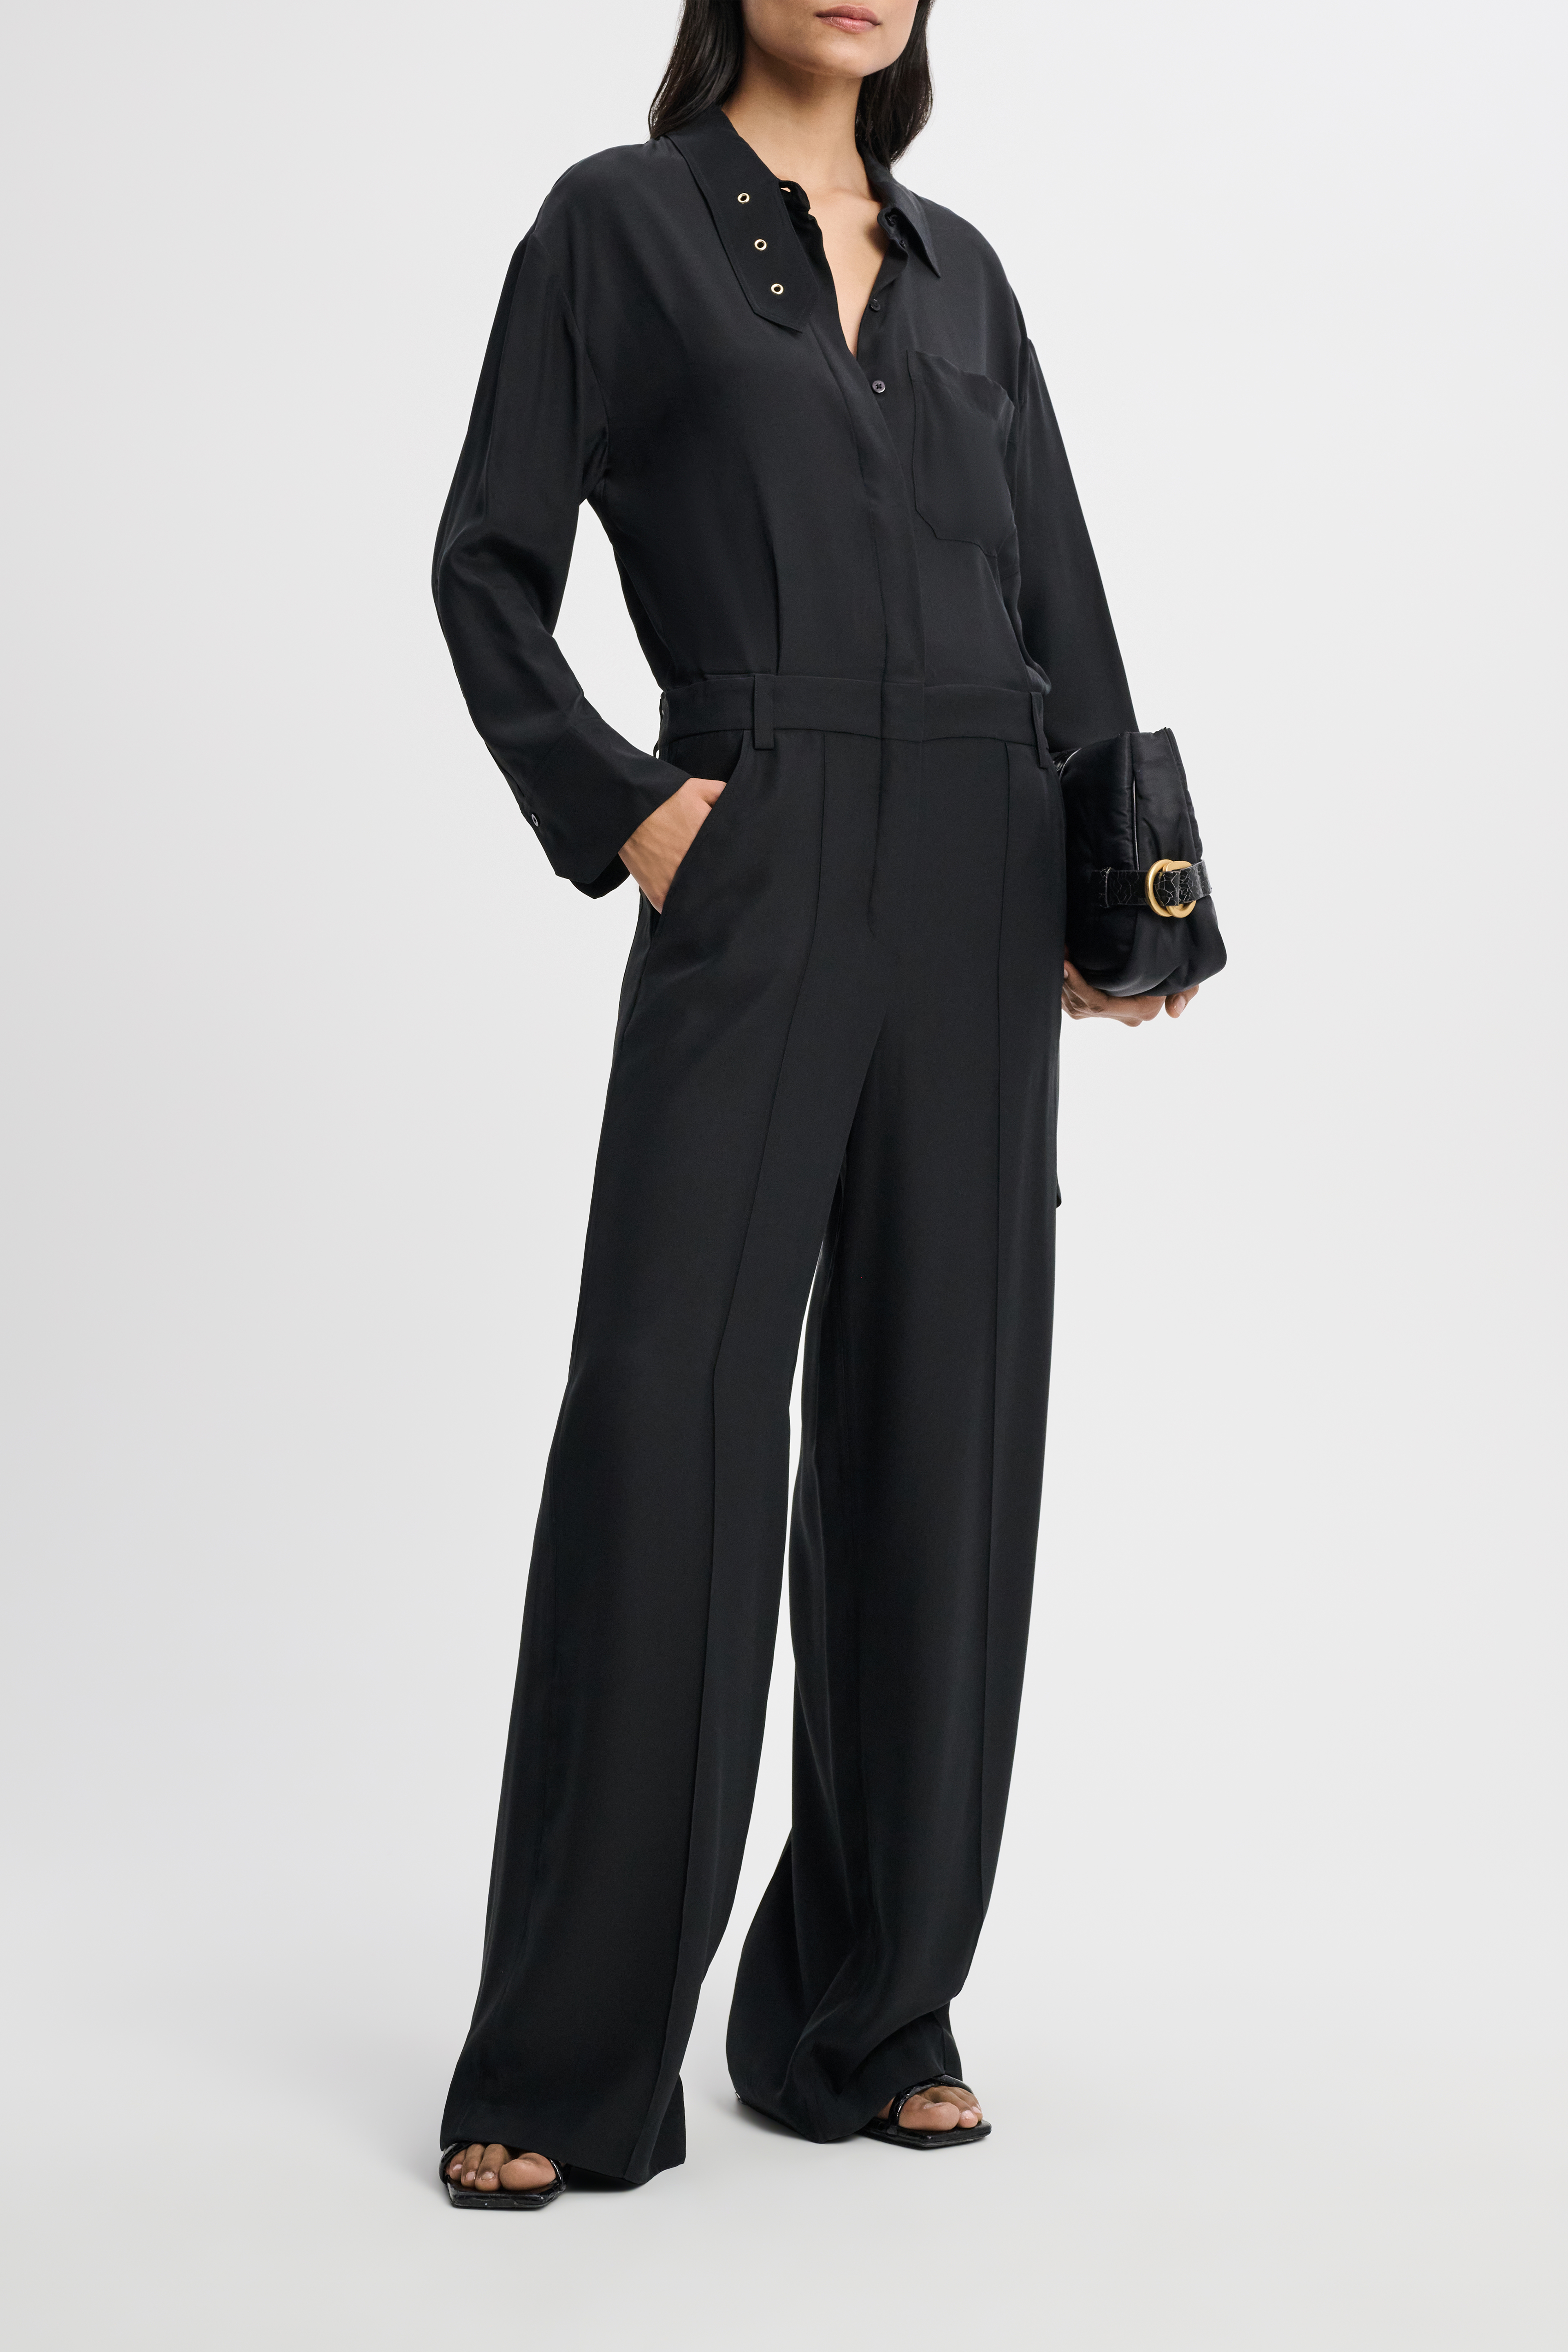 Dorothee Schumacher Silk charmeuse jumpsuit with collar